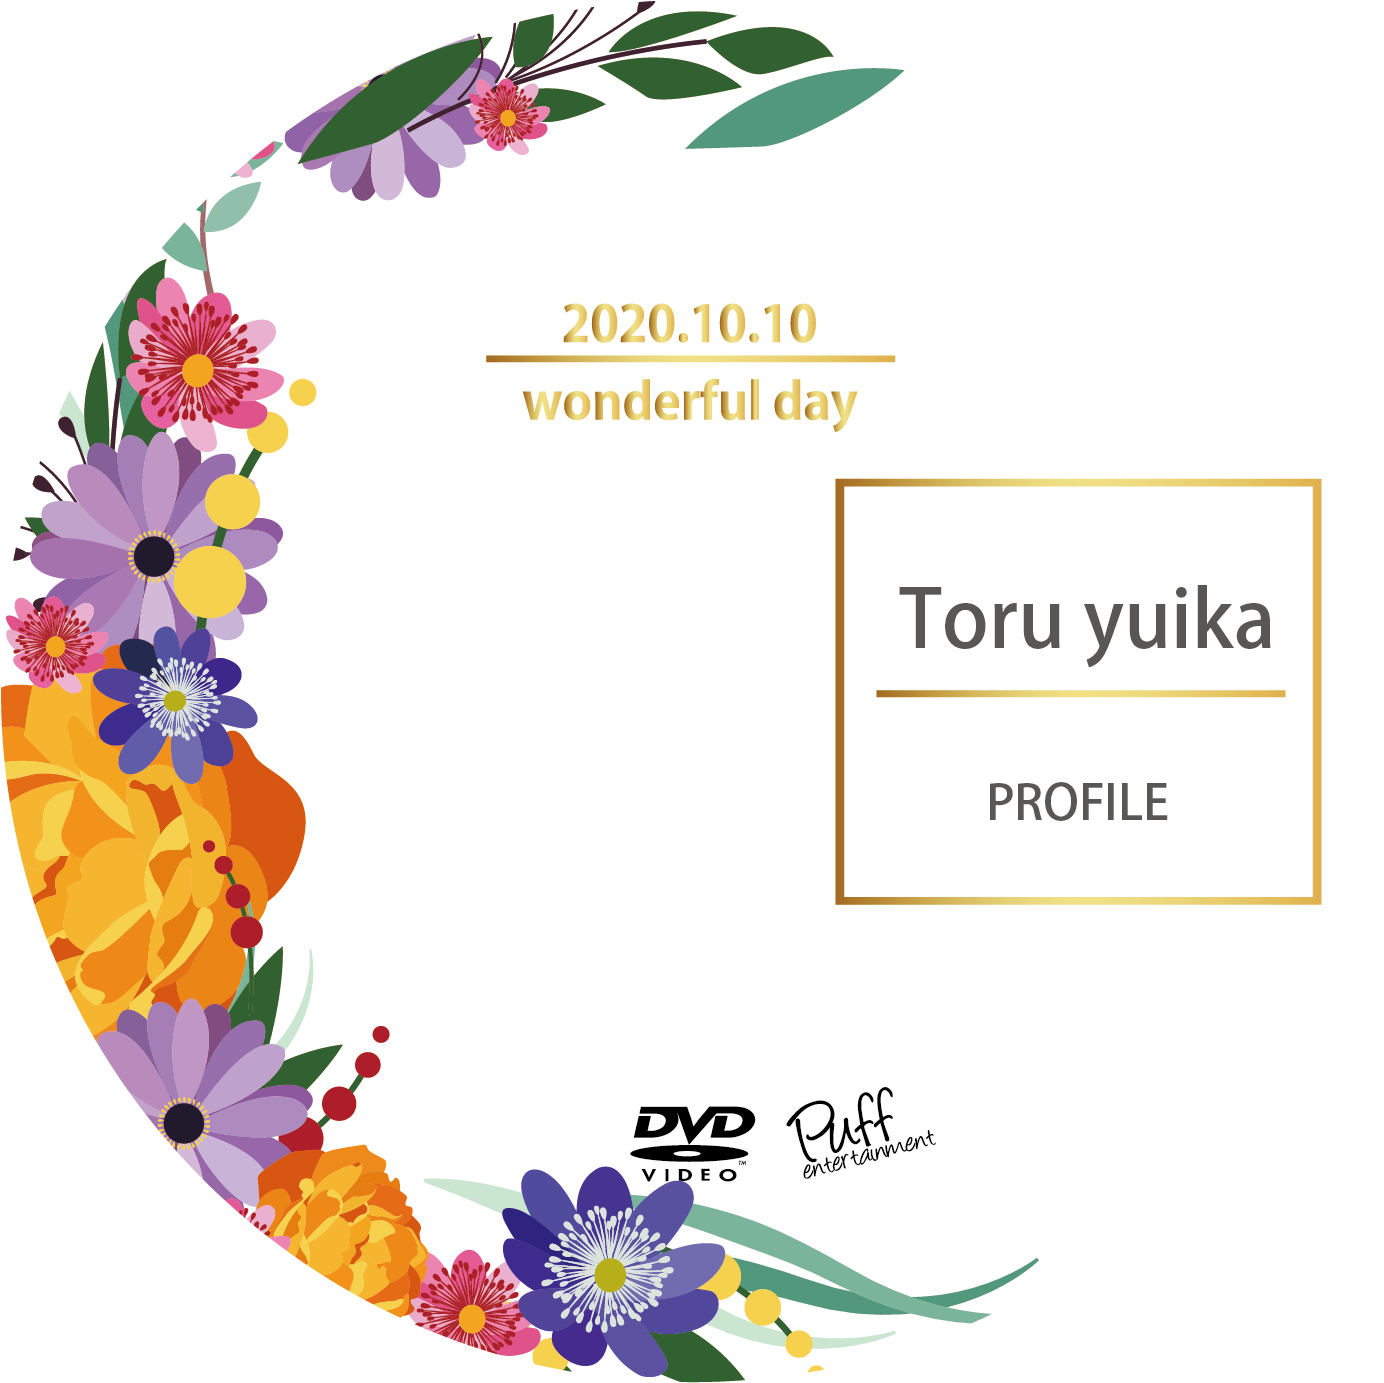 DVD02